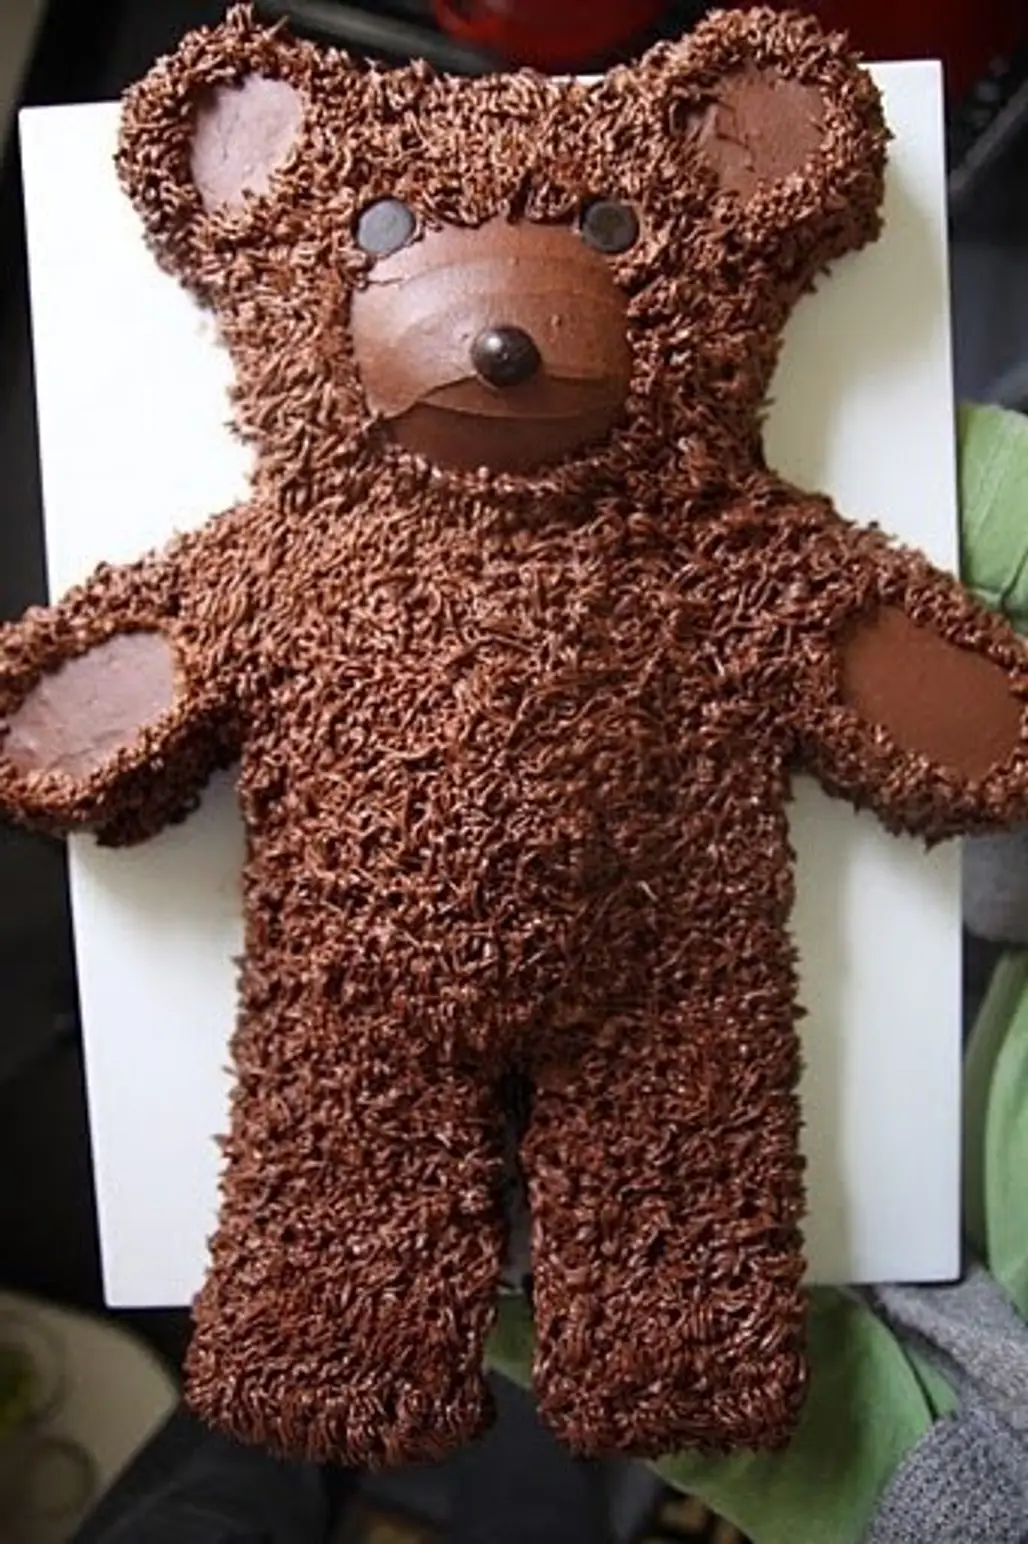 Teddy Bear Cake!